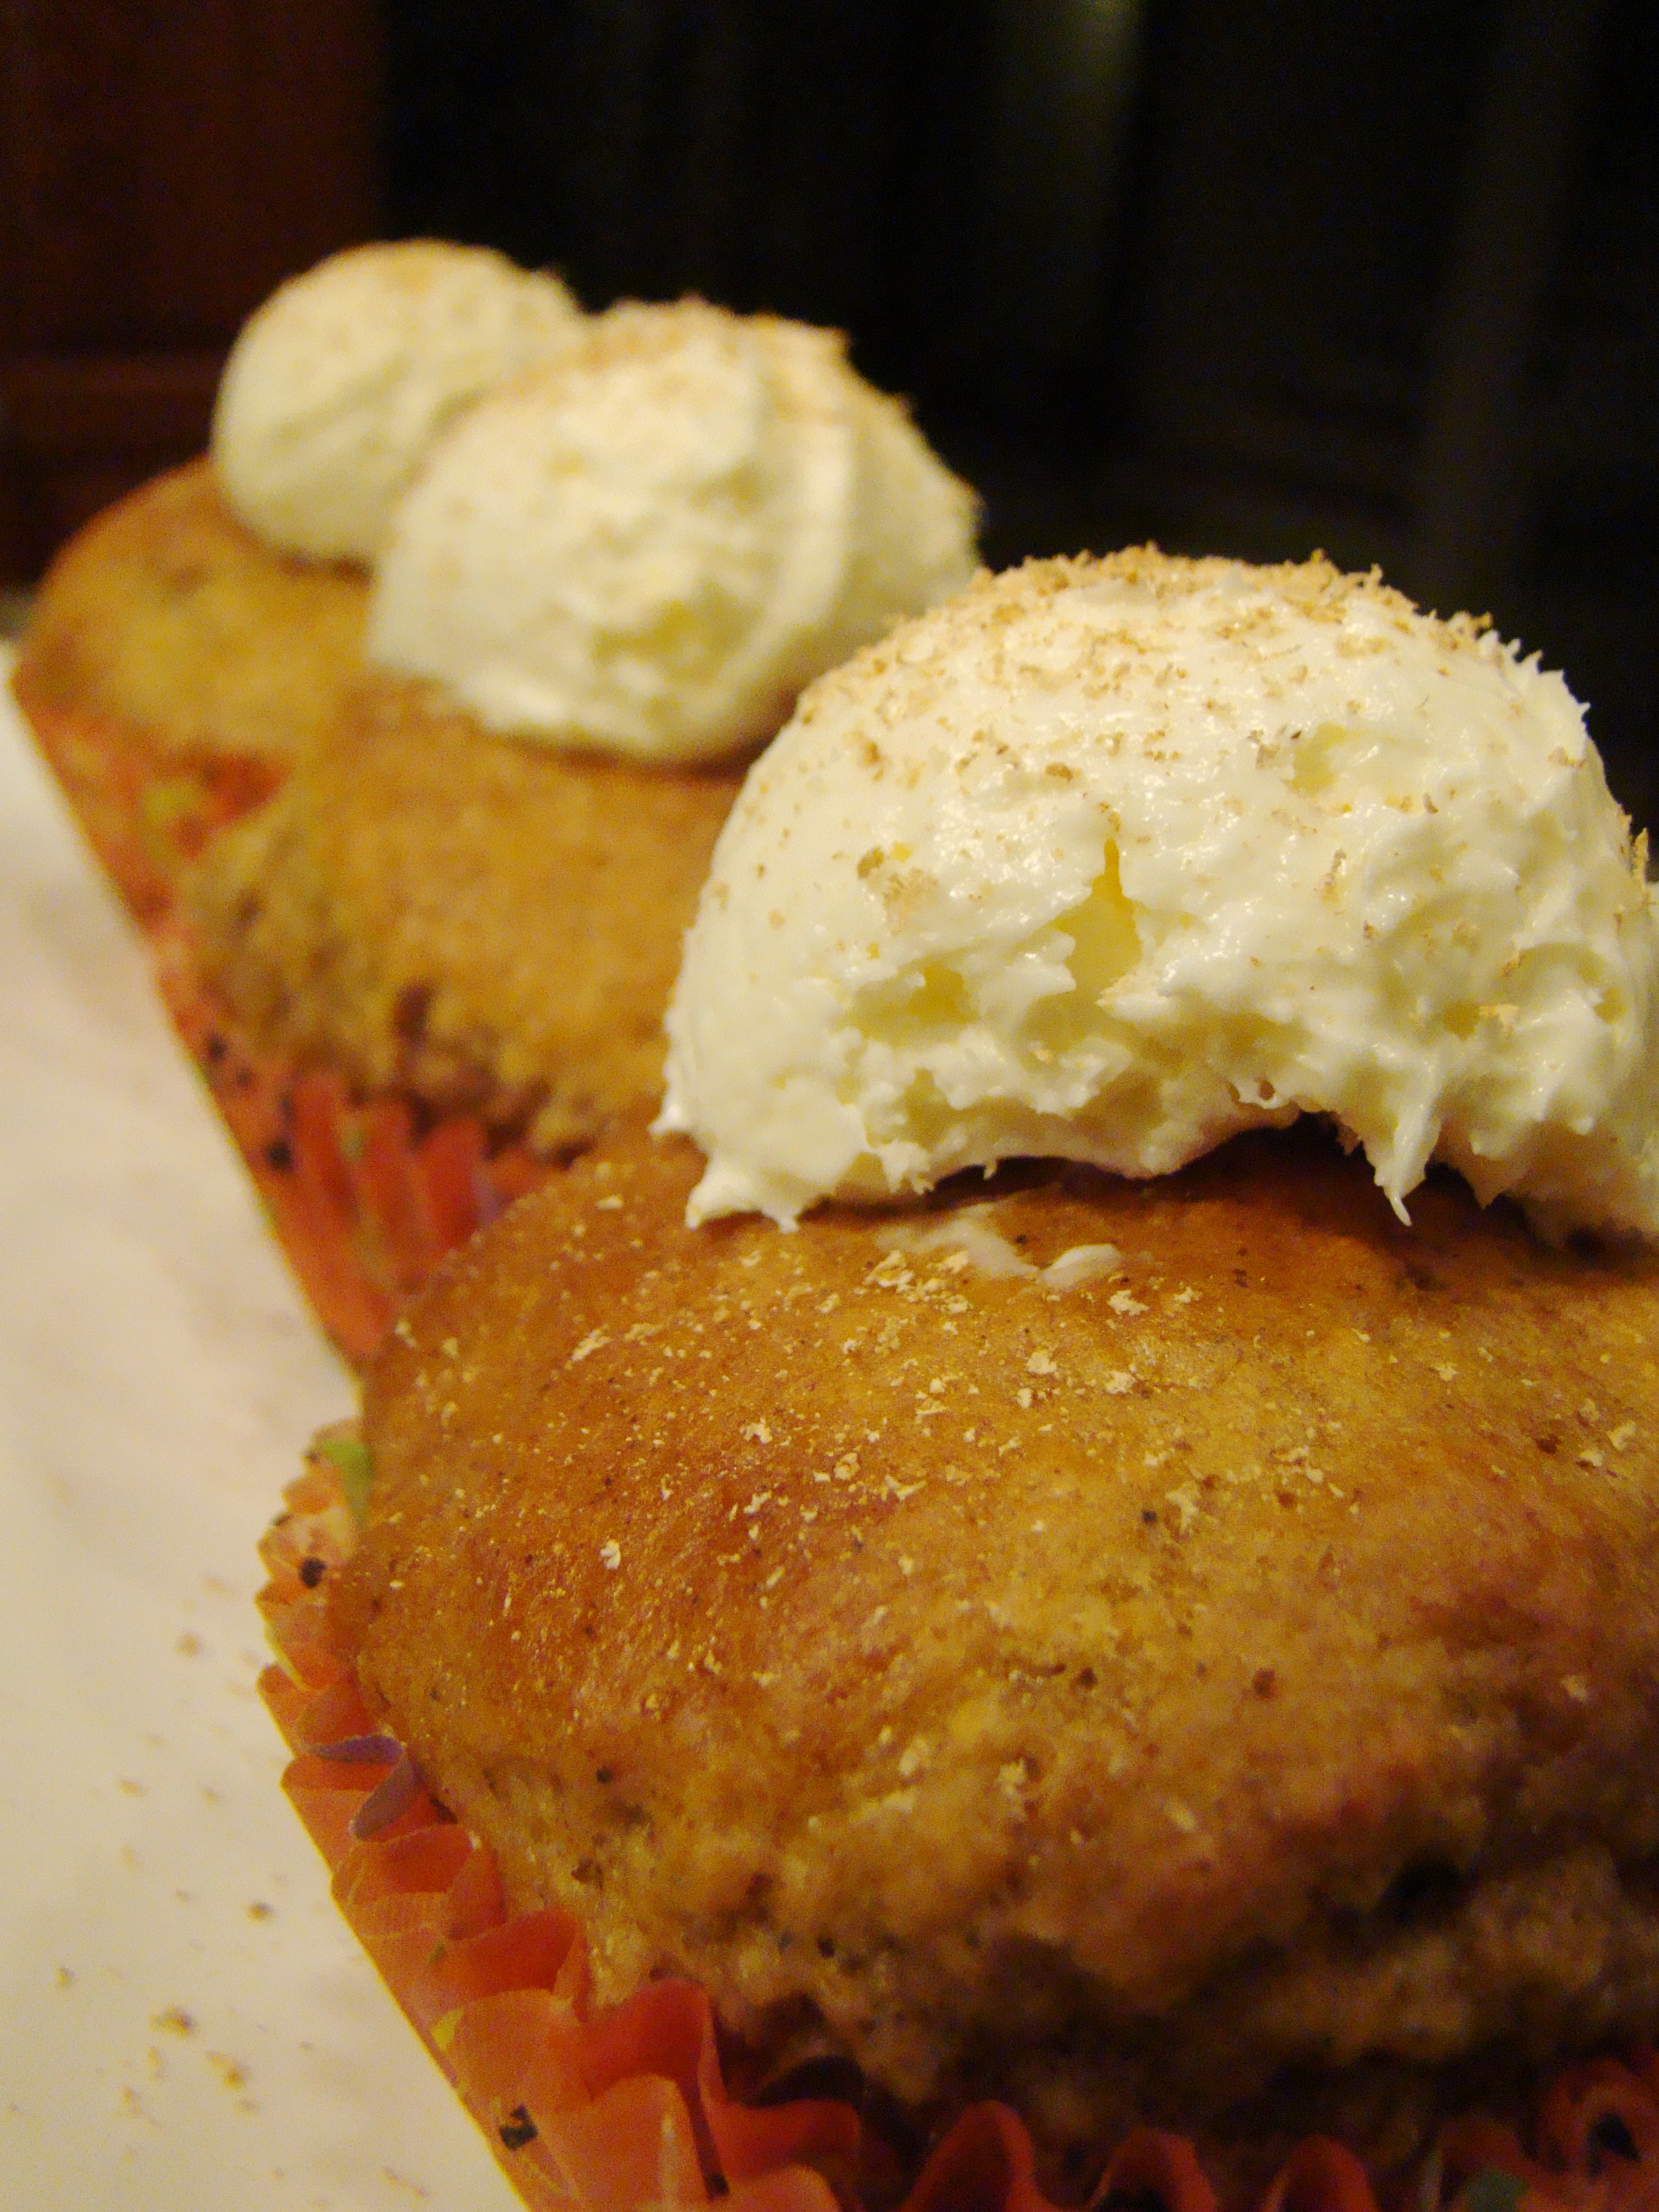 Bumpkin Pumpkin Spice Cupcake with Tofutti Frosting